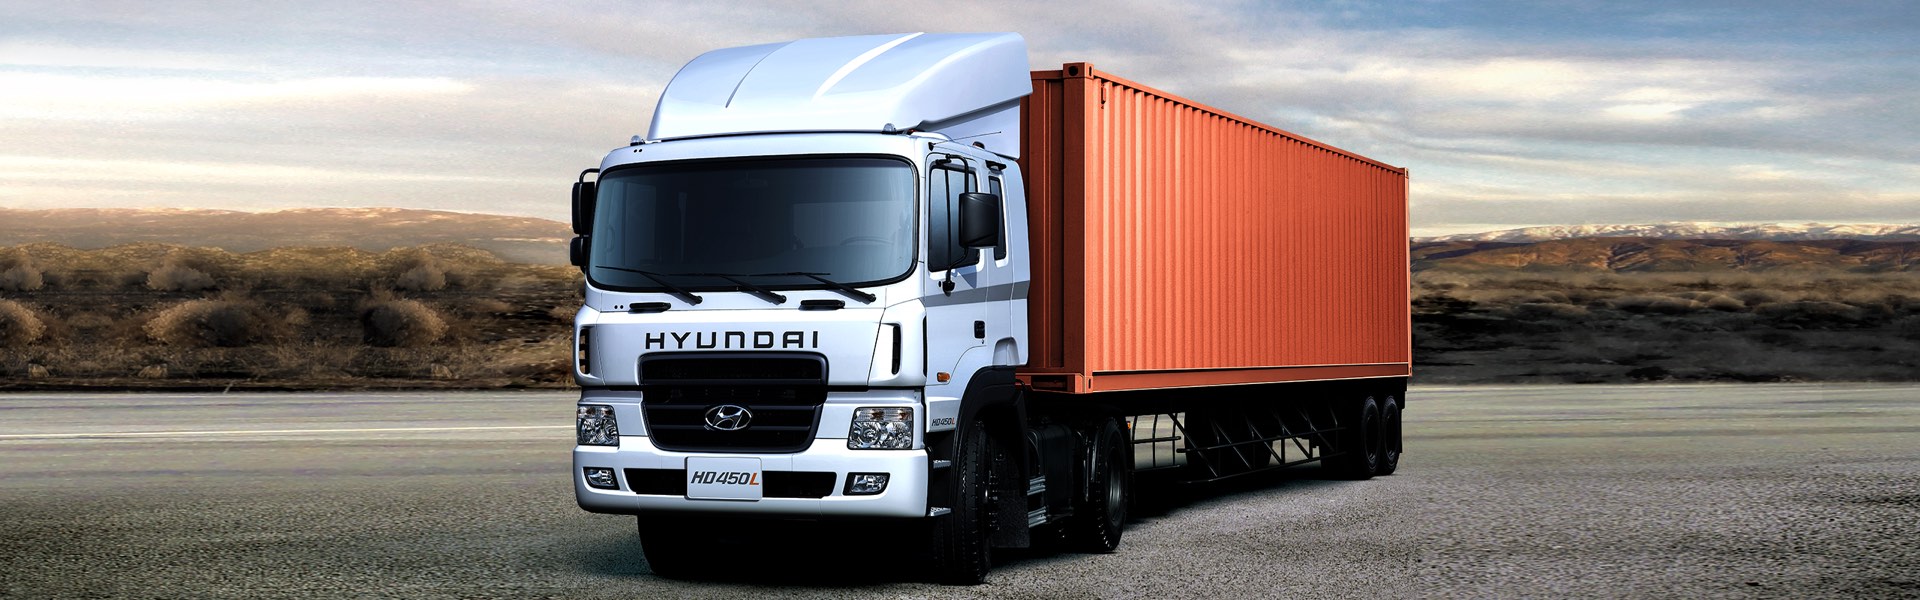 Hyundai Truck, Long distance haulage